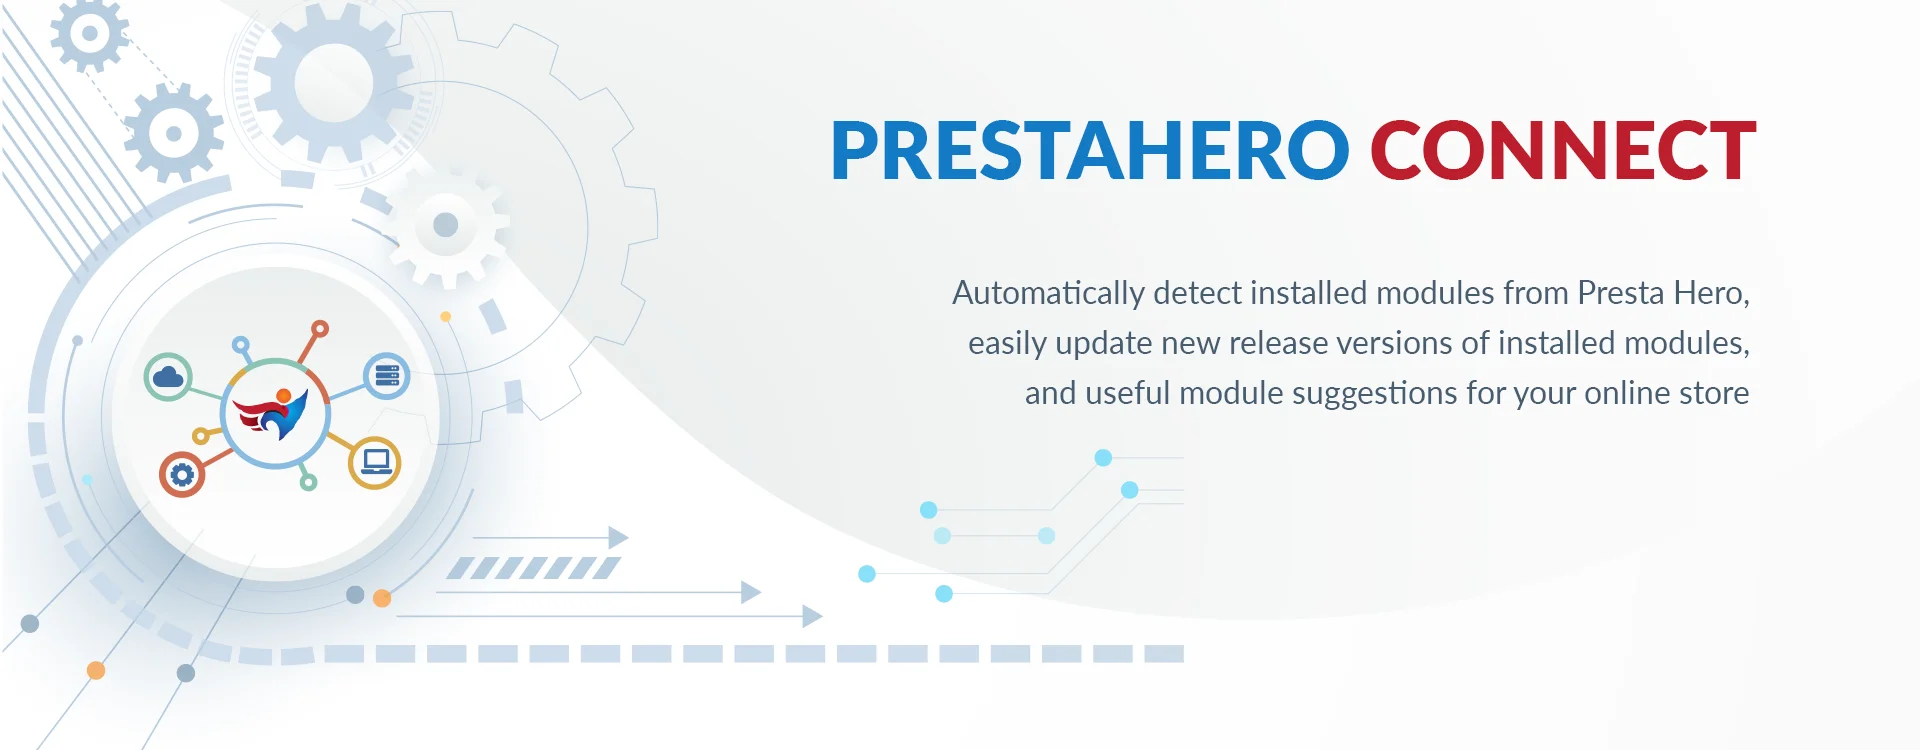 How to upgrade PrestaShop modules using PrestaHero Connect